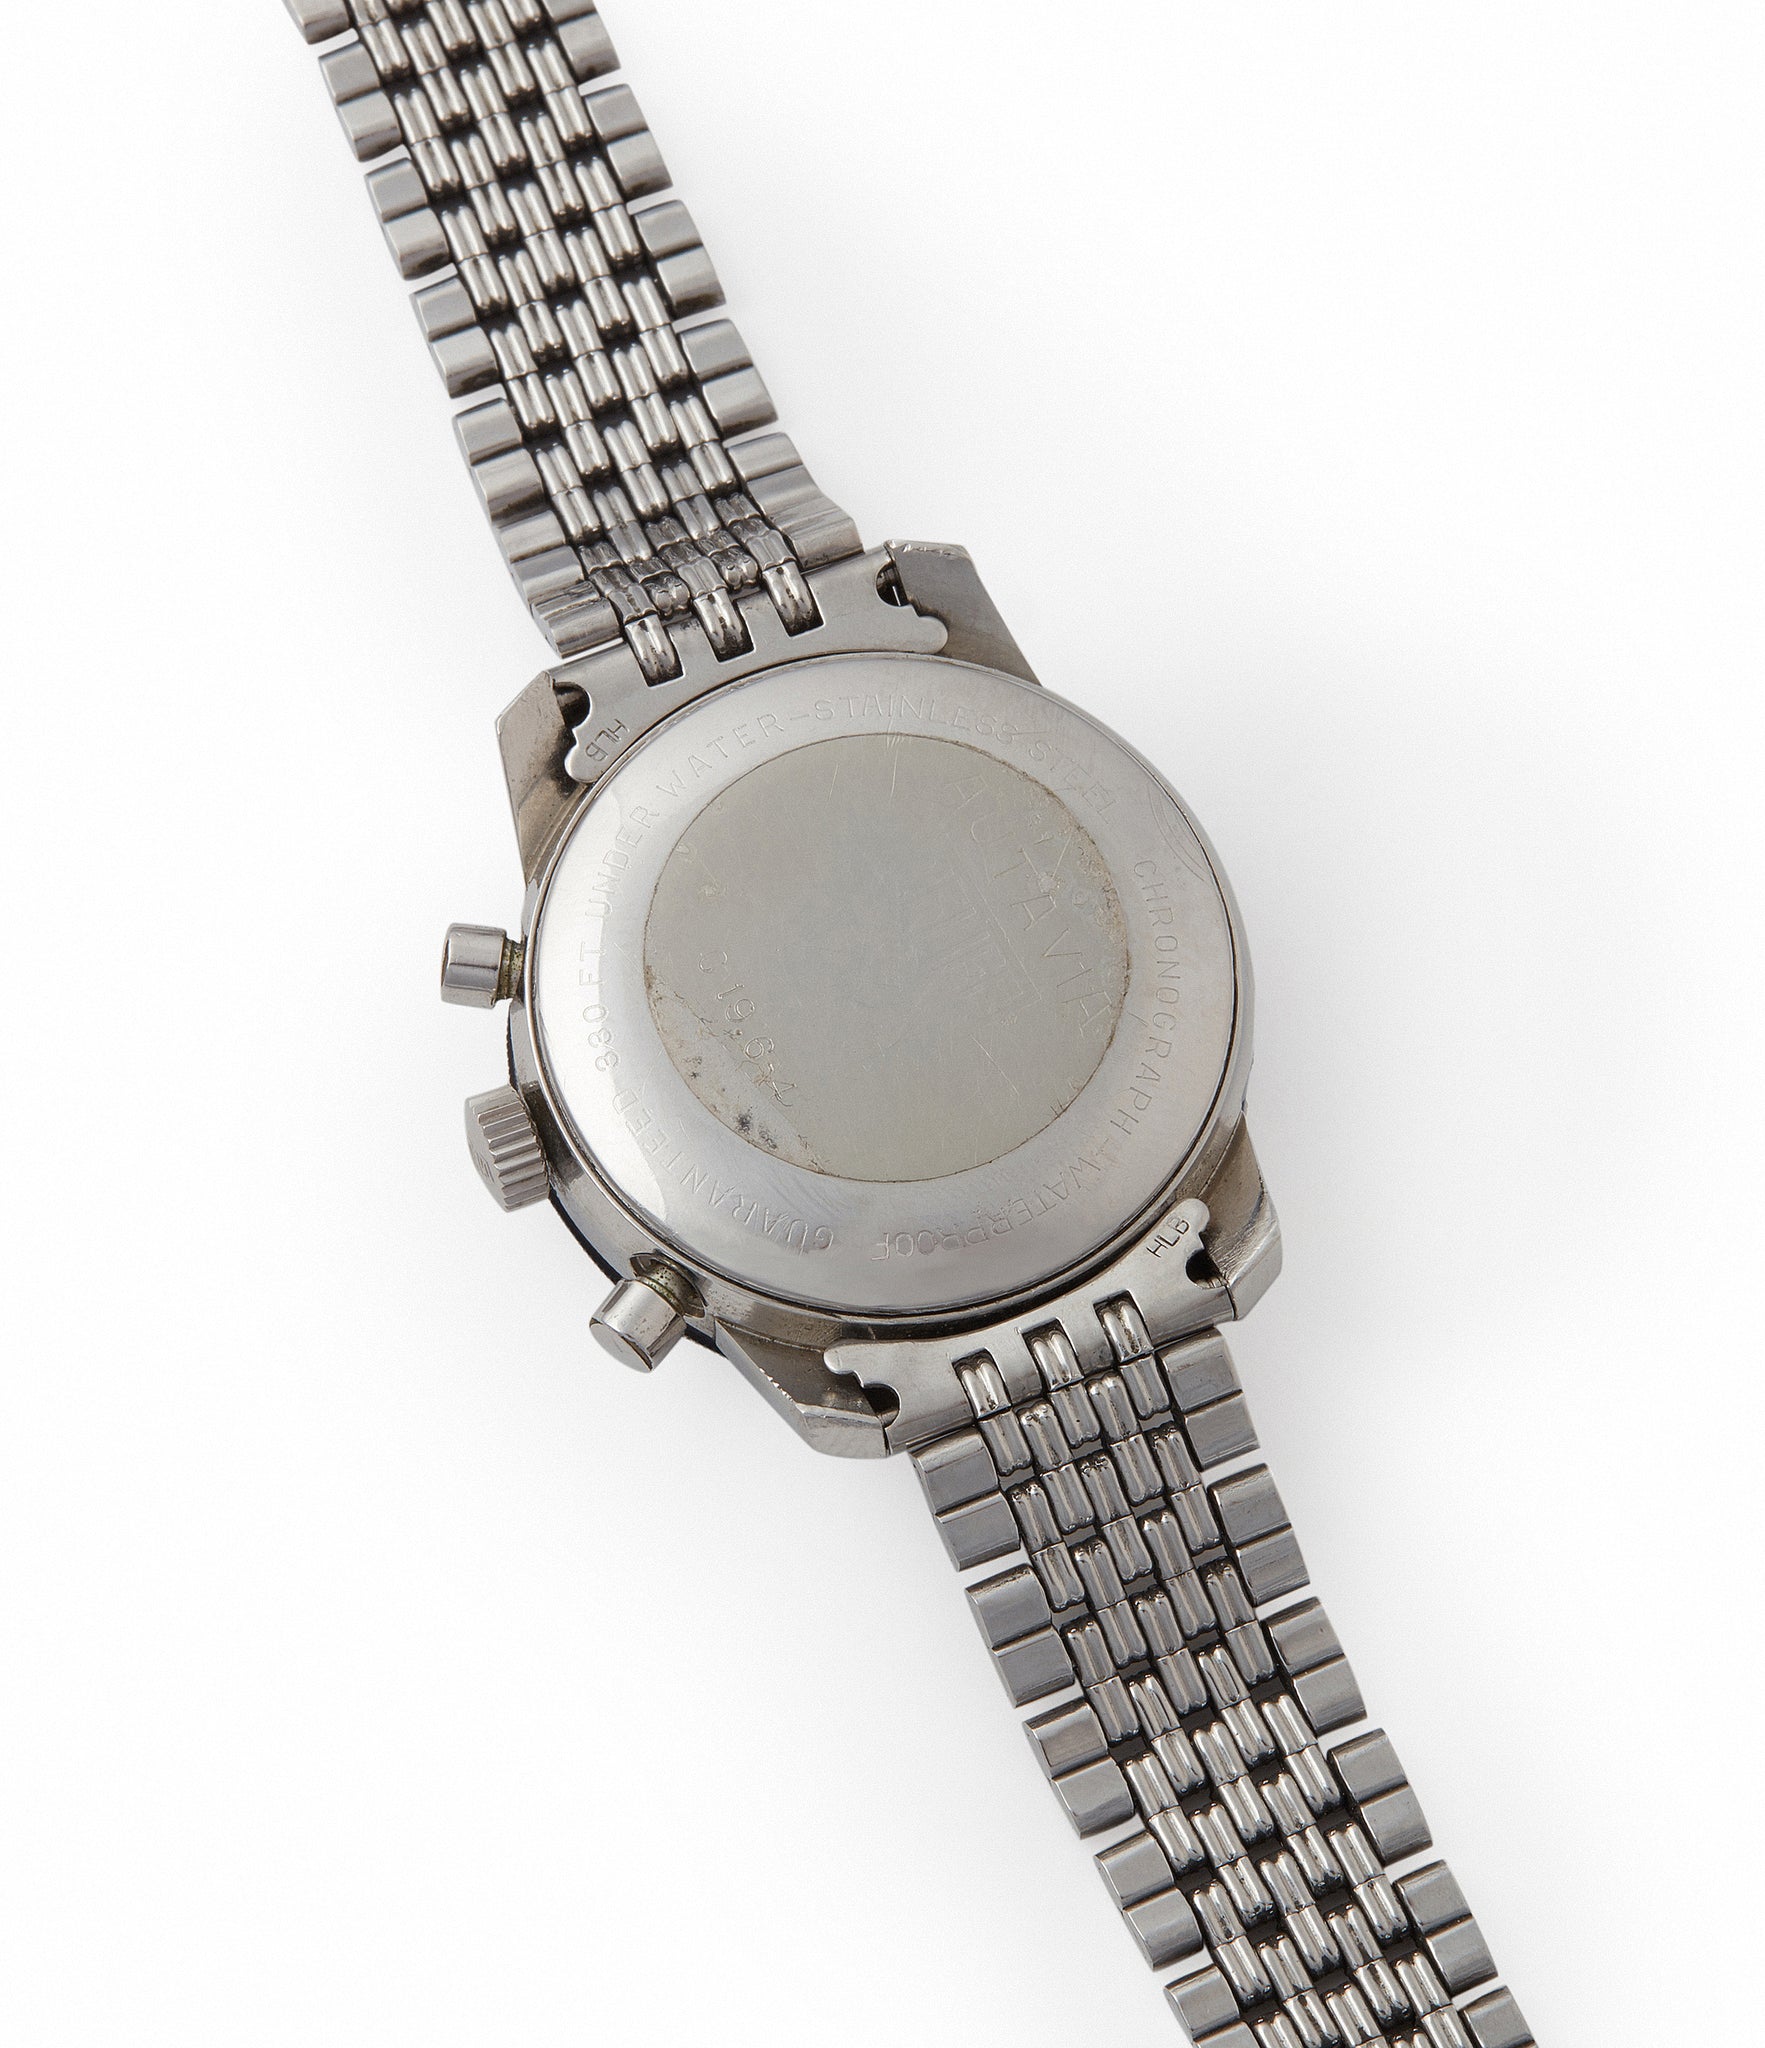 Vintage Heuer Autavia 2446 C SN | Buy rare vintage Heuer Autavia watch ...